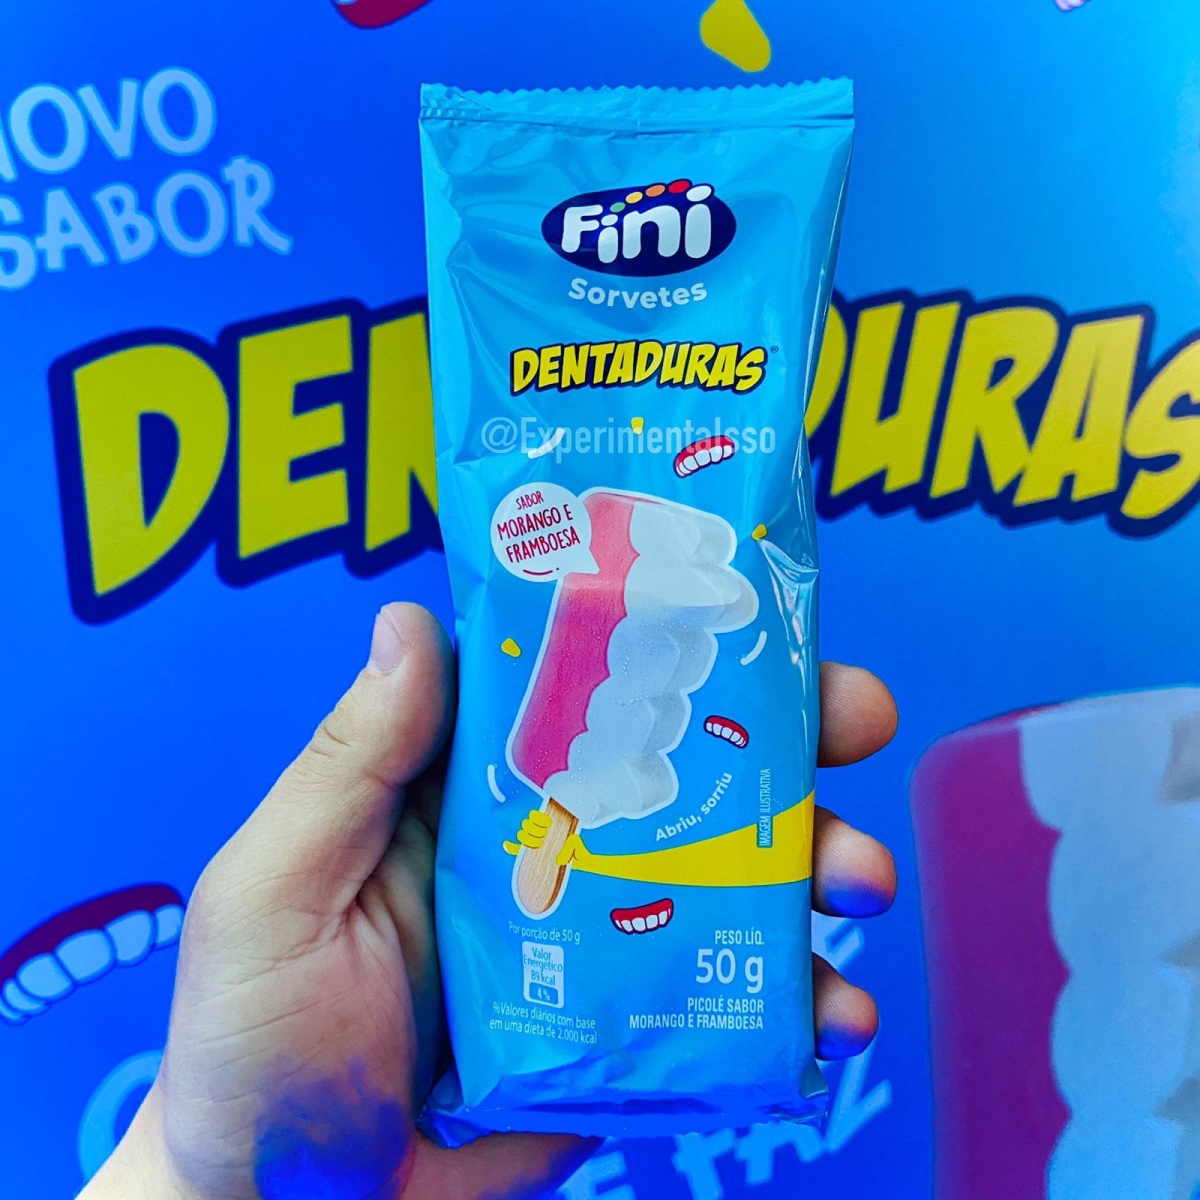 Novo sorvete de Dentaduras da FINI 😍😍😍